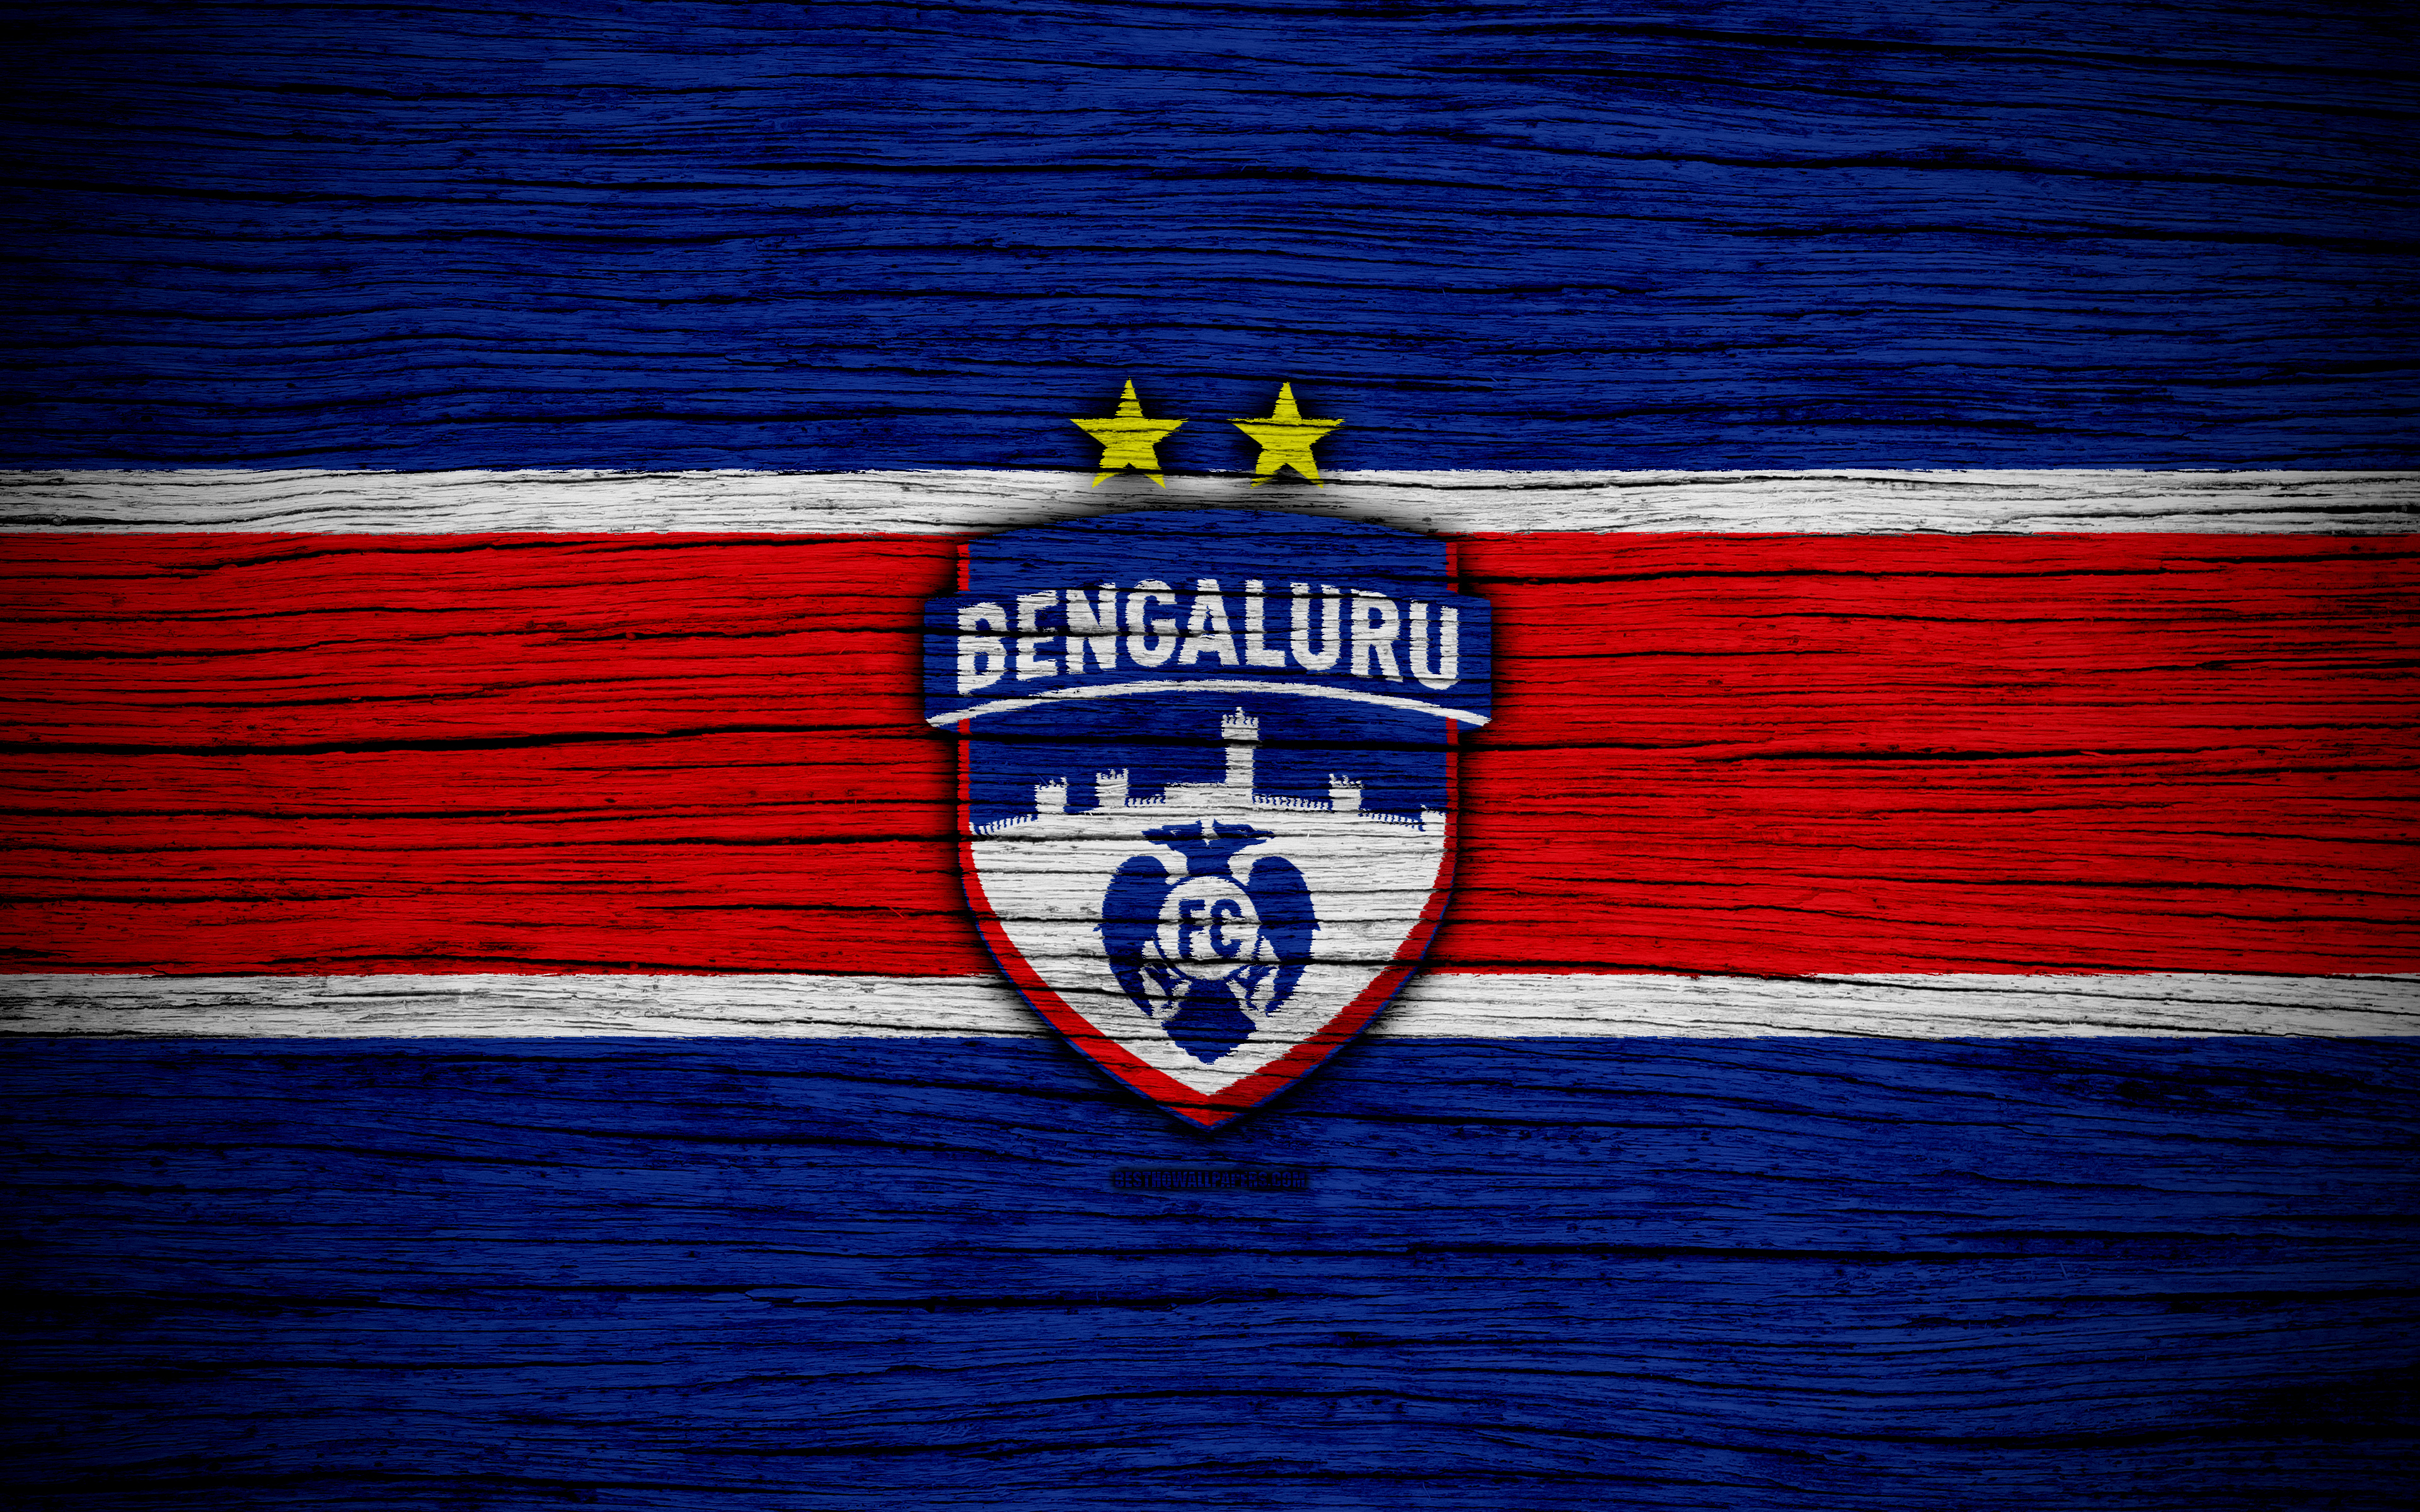 Wallpaper Bengaluru Fc 4k Indian Super League Soccer